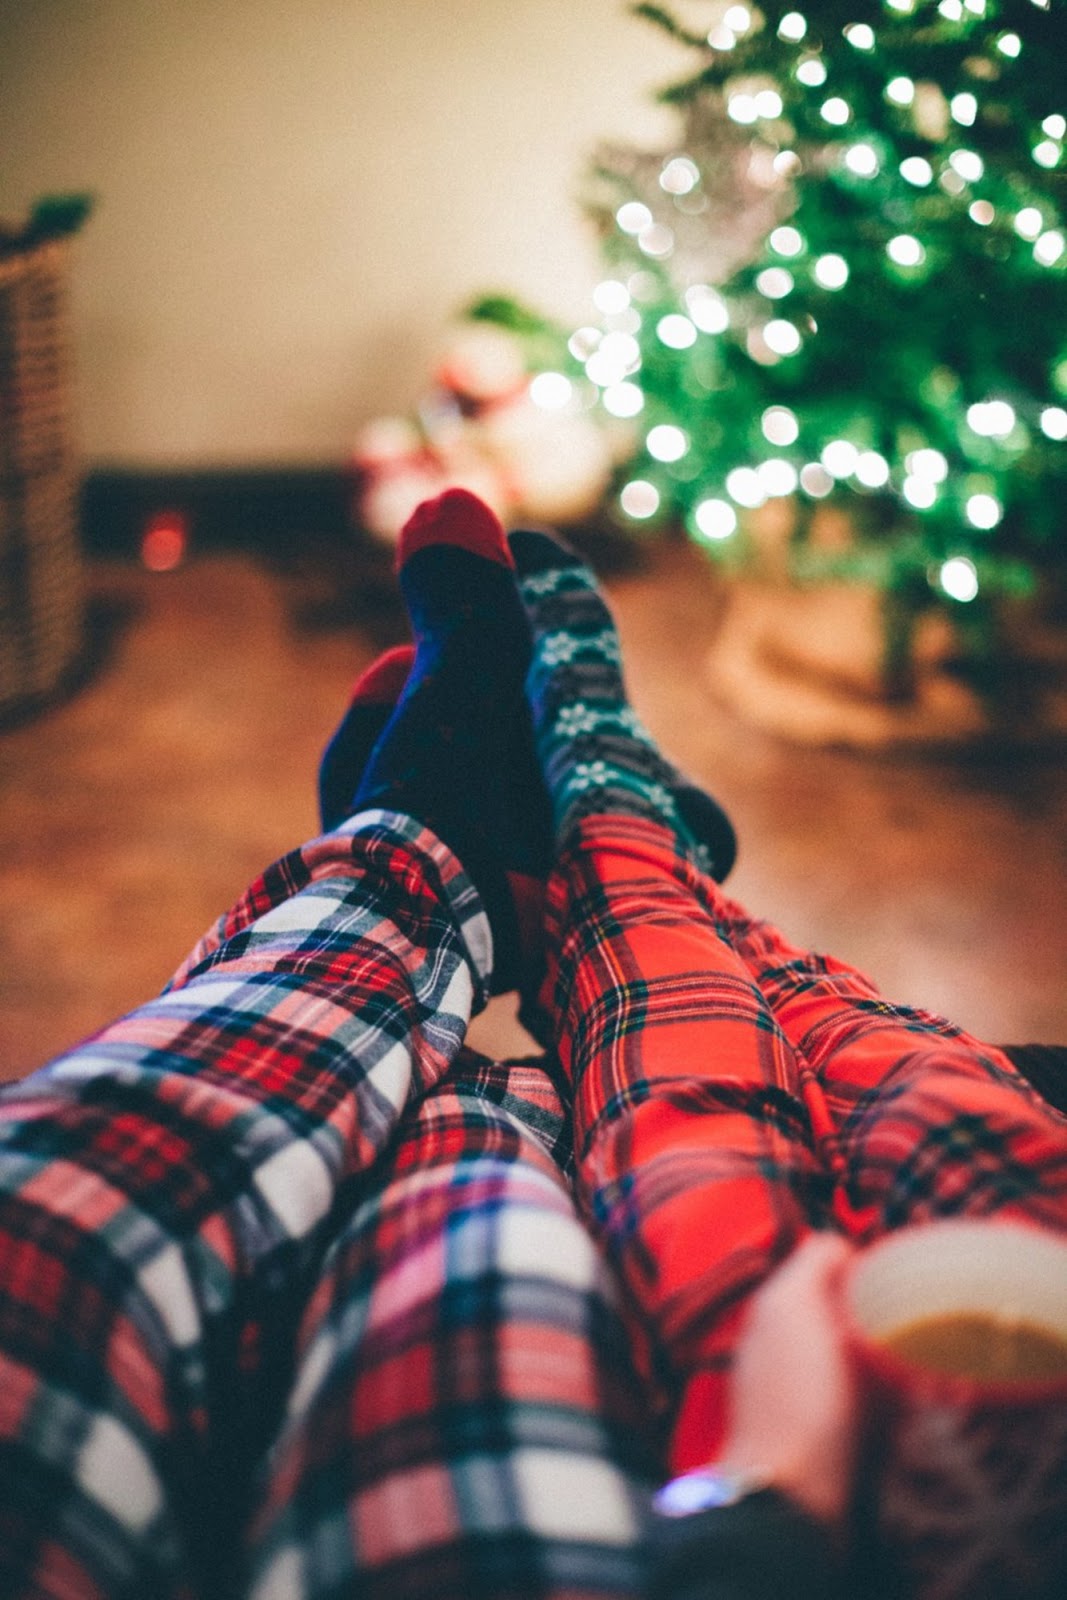 plaid pajamas for cozy winter evening